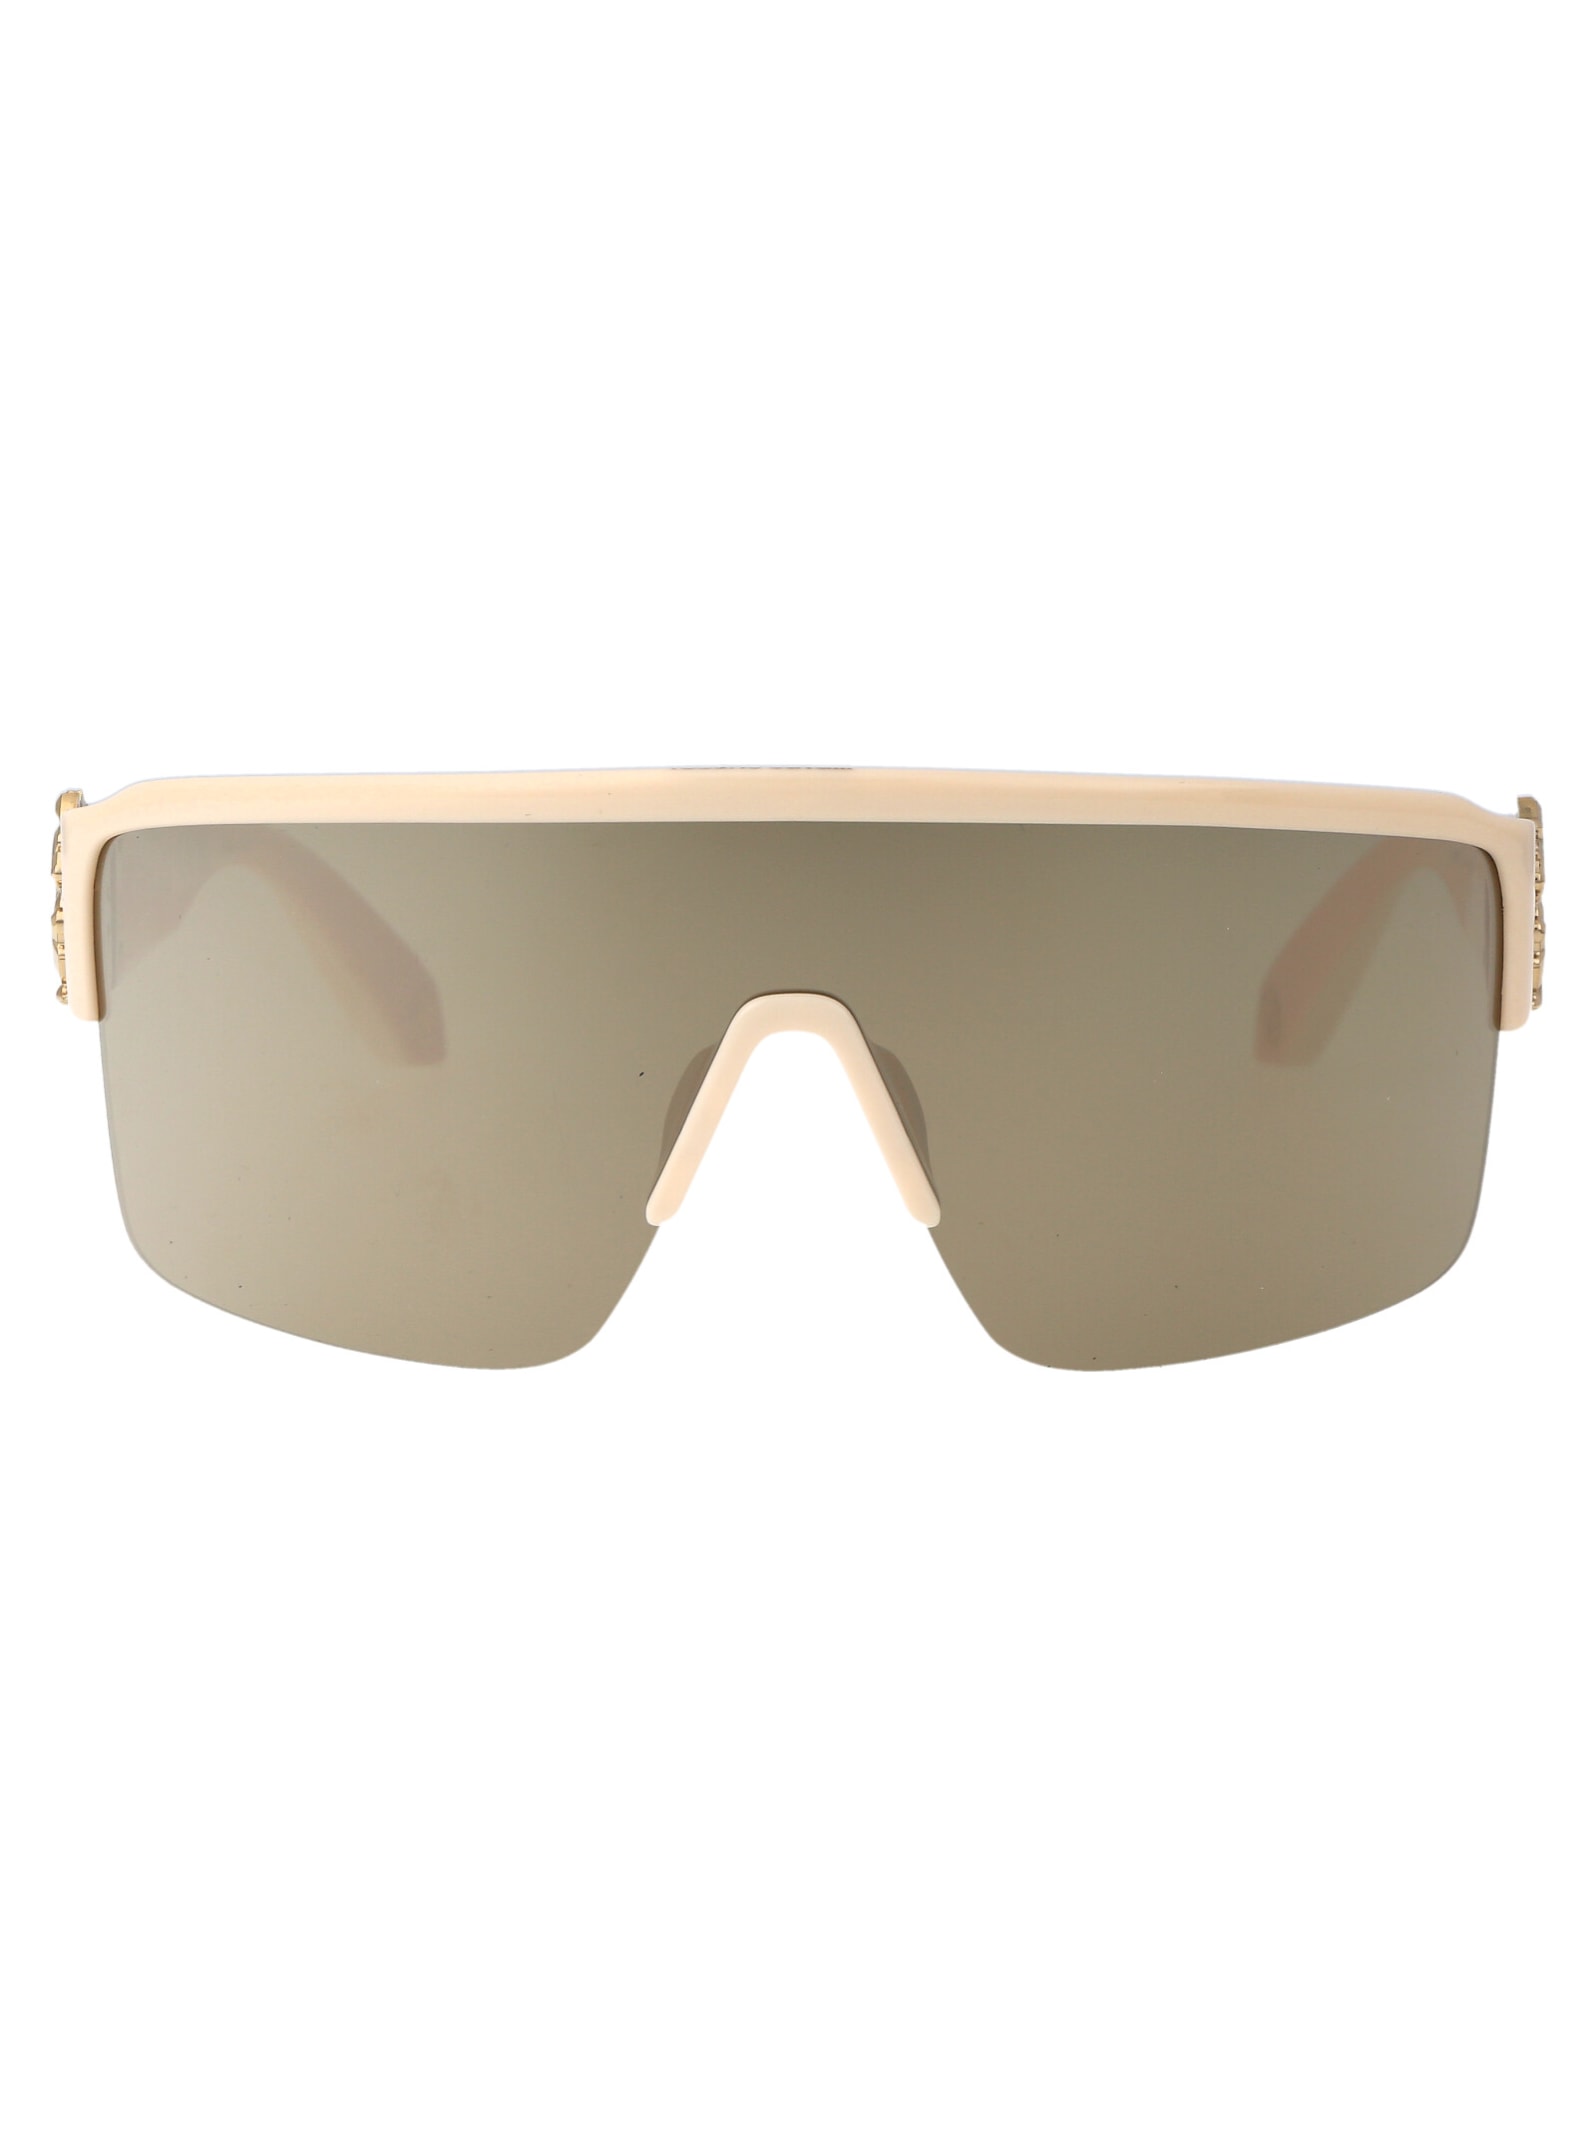 Roberto Cavalli Src037m Sunglasses